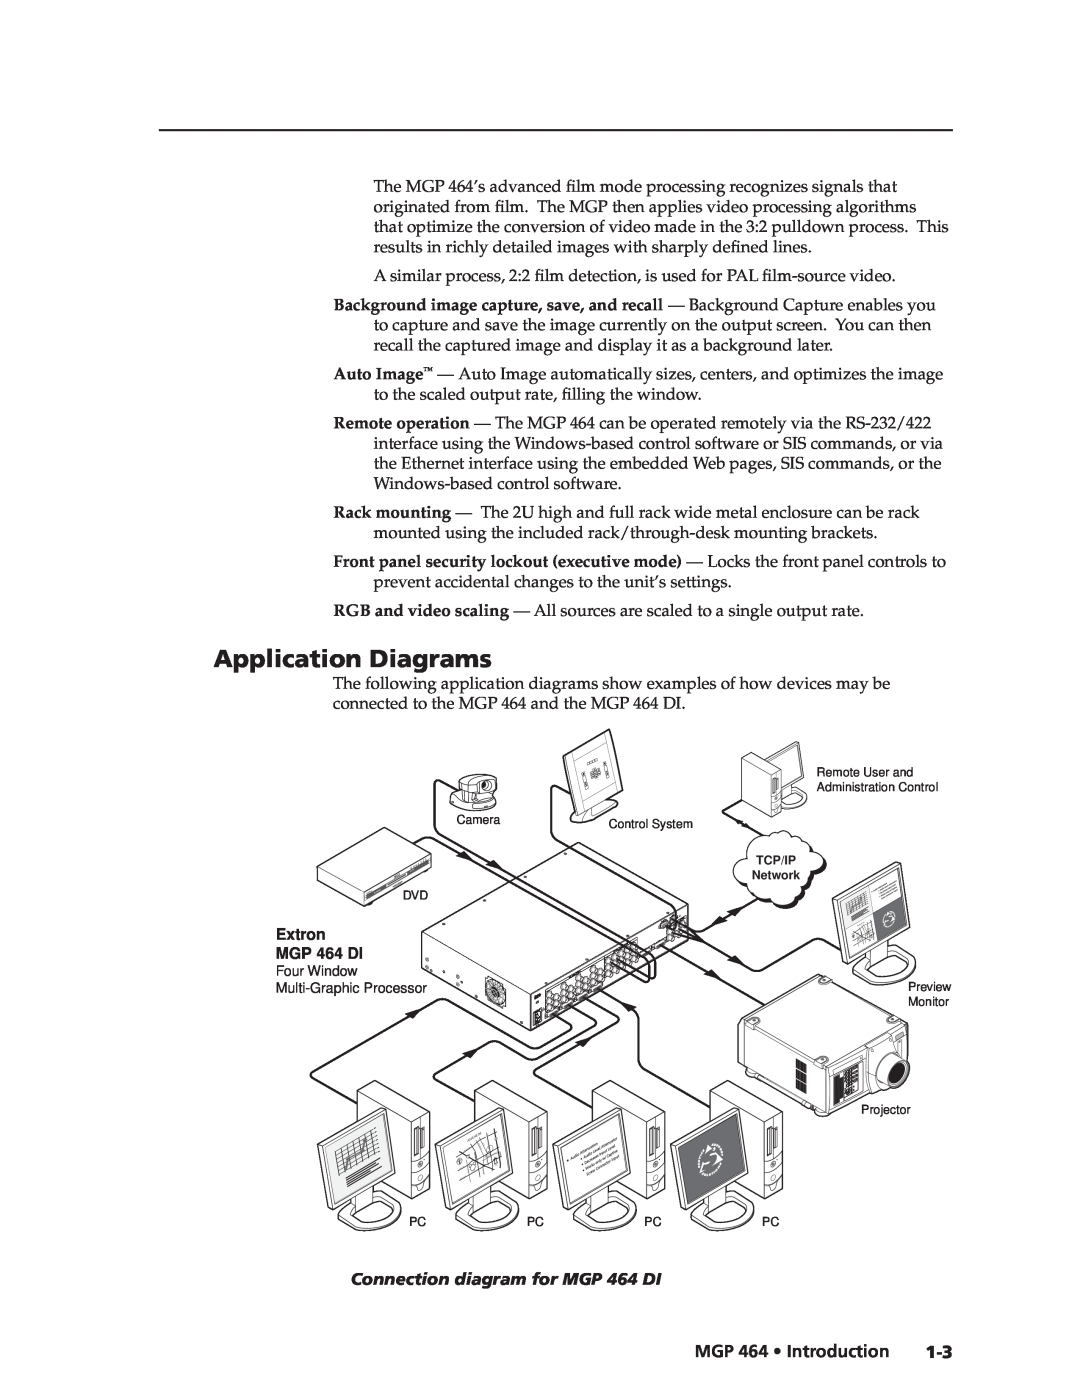 Extron electronic manual Application Diagrams, Preliminary, Connection diagram for MGP 464 DI, MGP 464 Introduction 